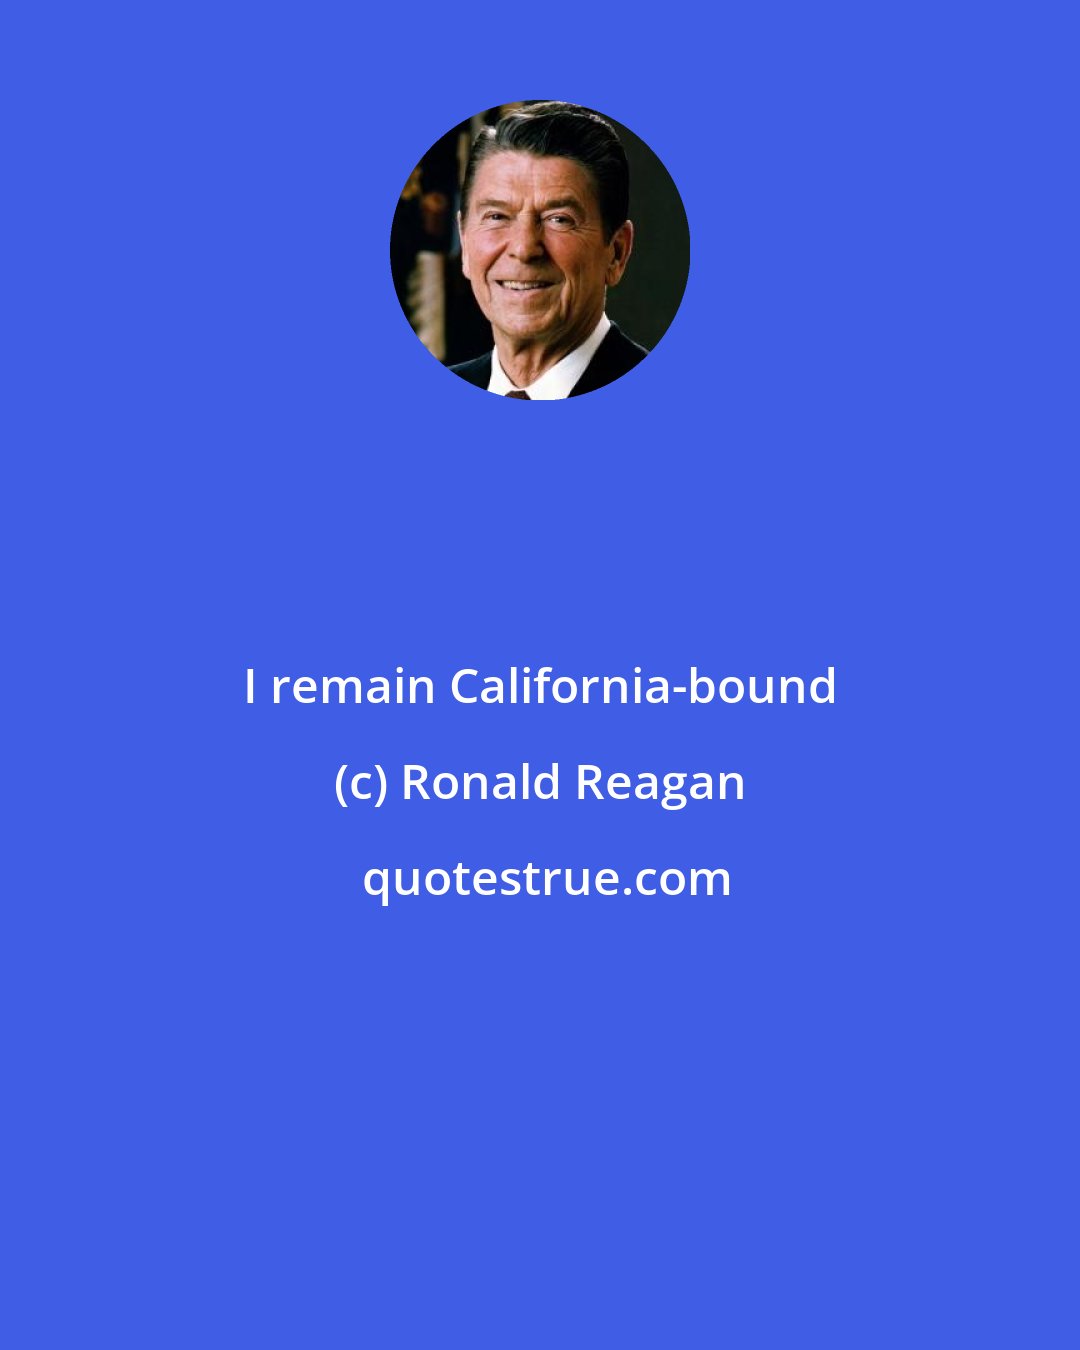 Ronald Reagan: I remain California-bound